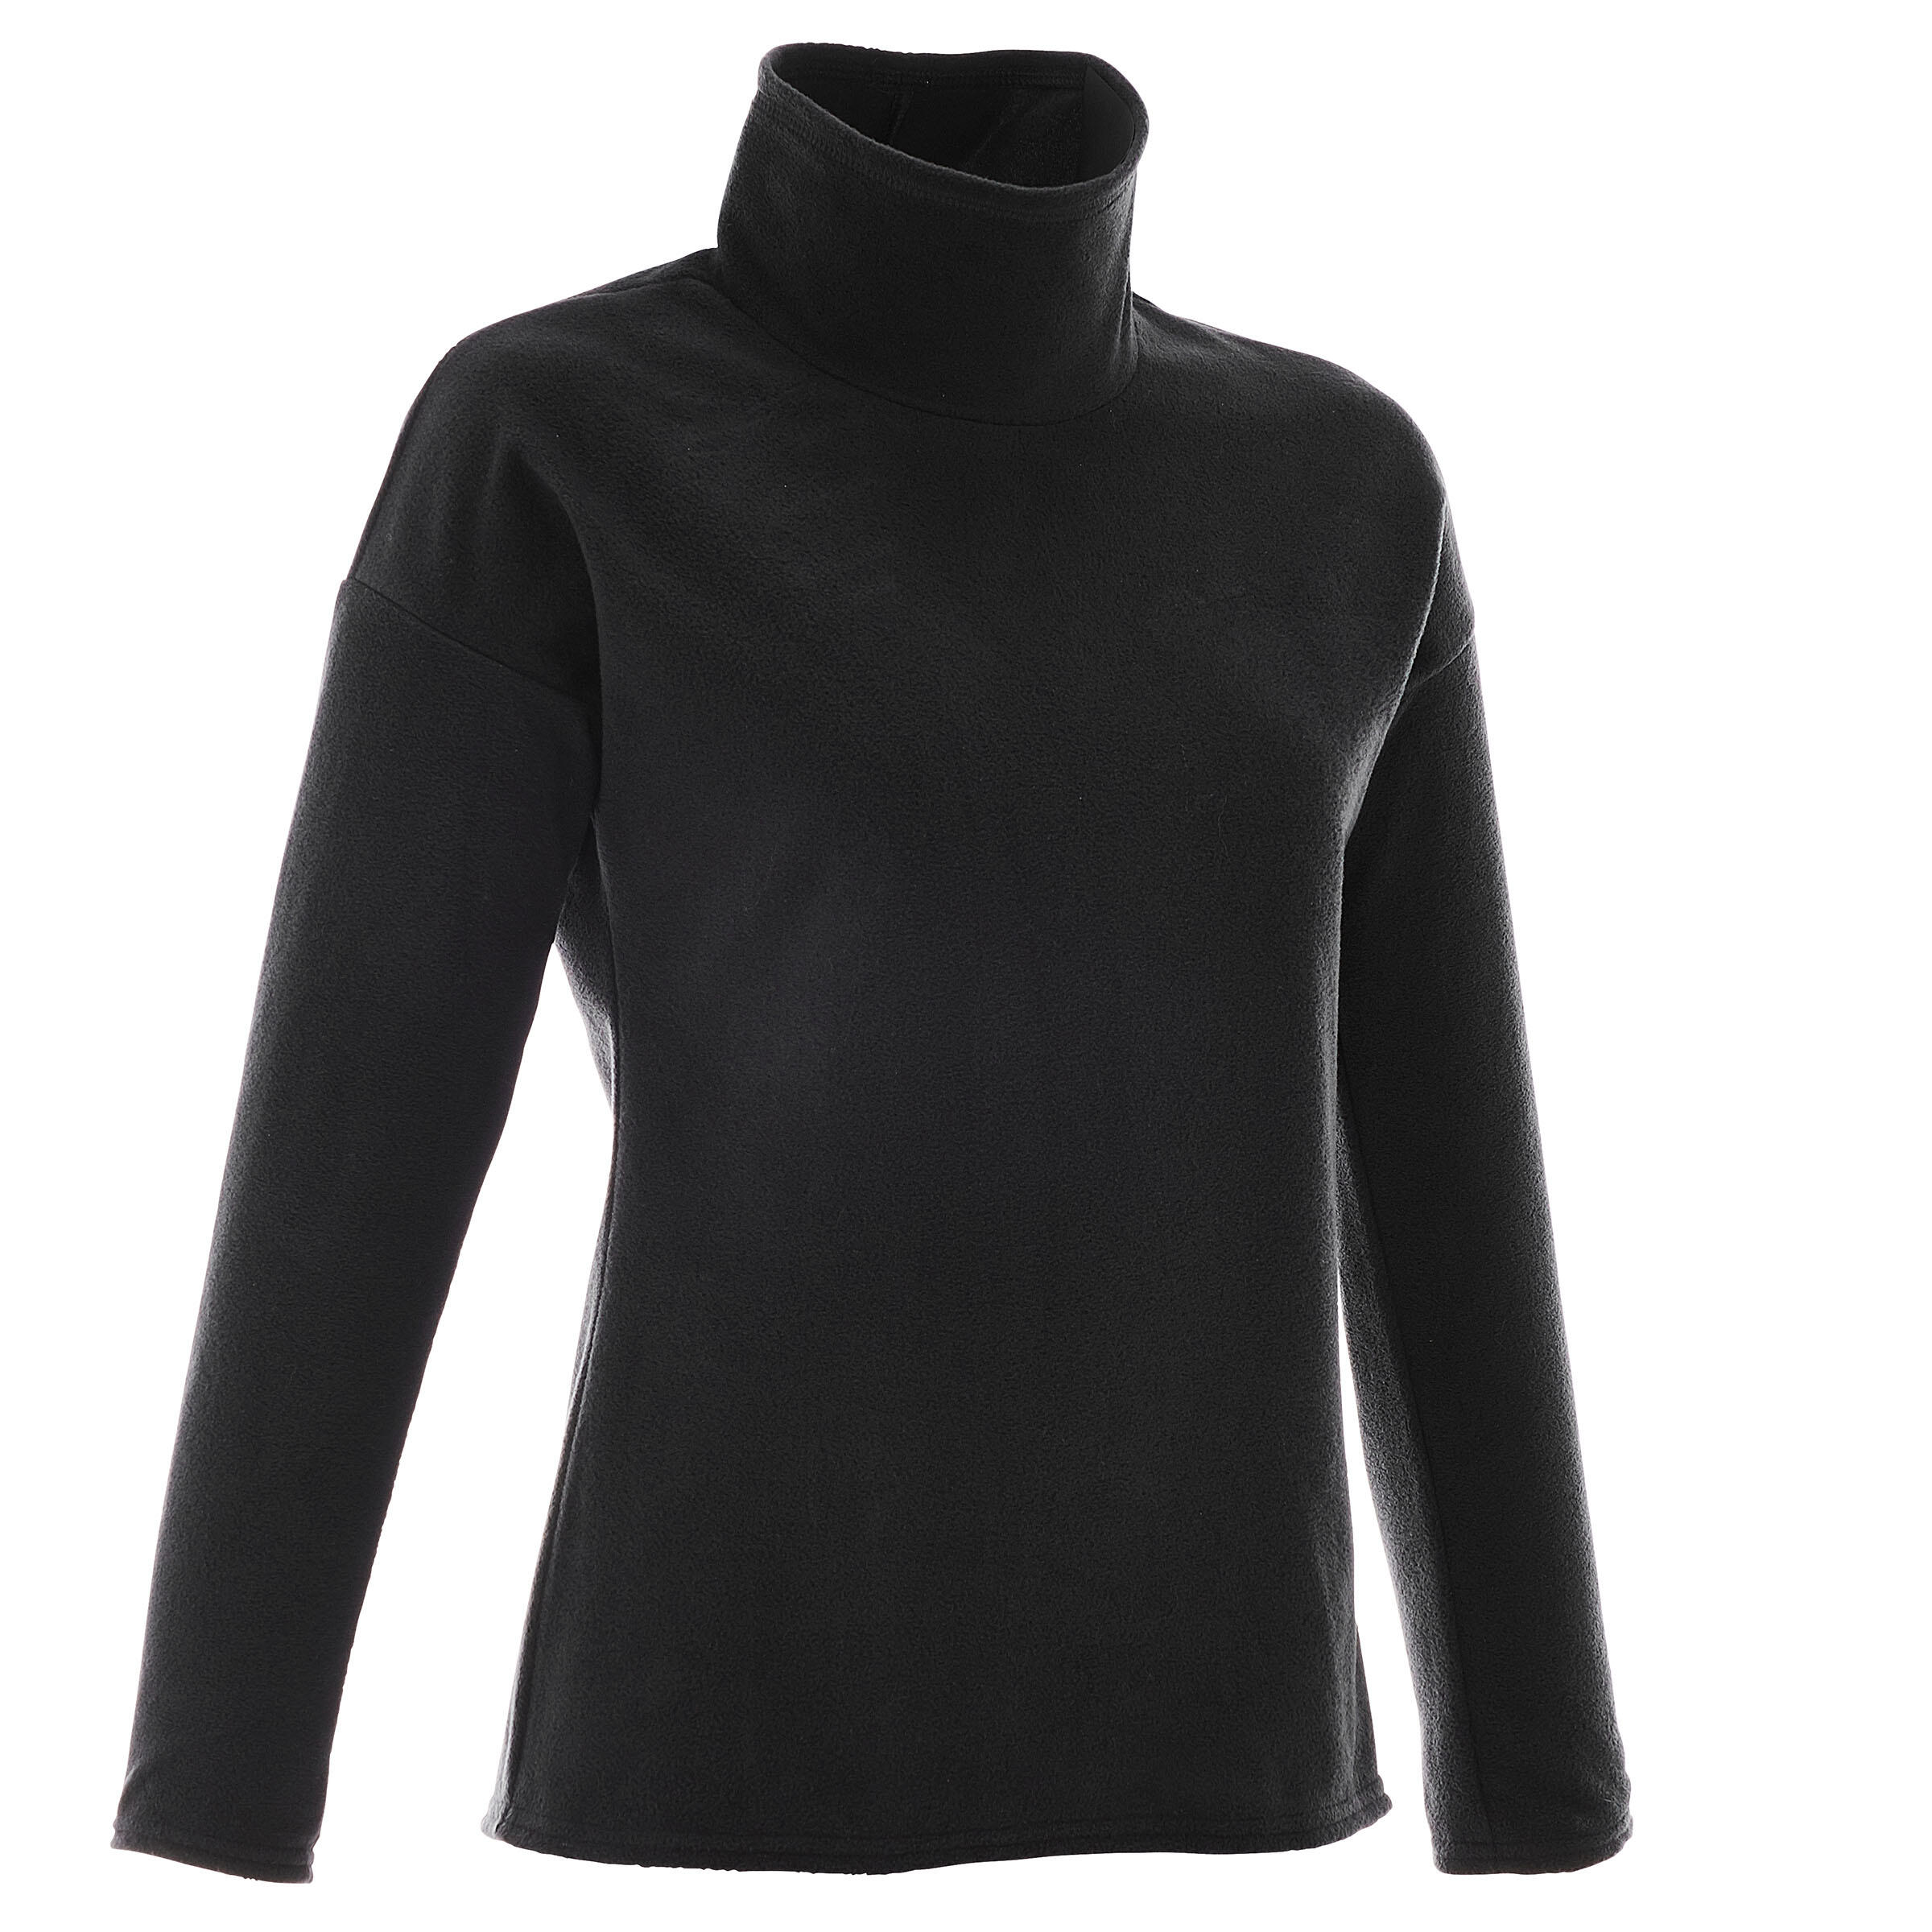 Decathlon sweatshirt WOMEN FASHION Jumpers & Sweatshirts Fleece Brown L discount 85% 